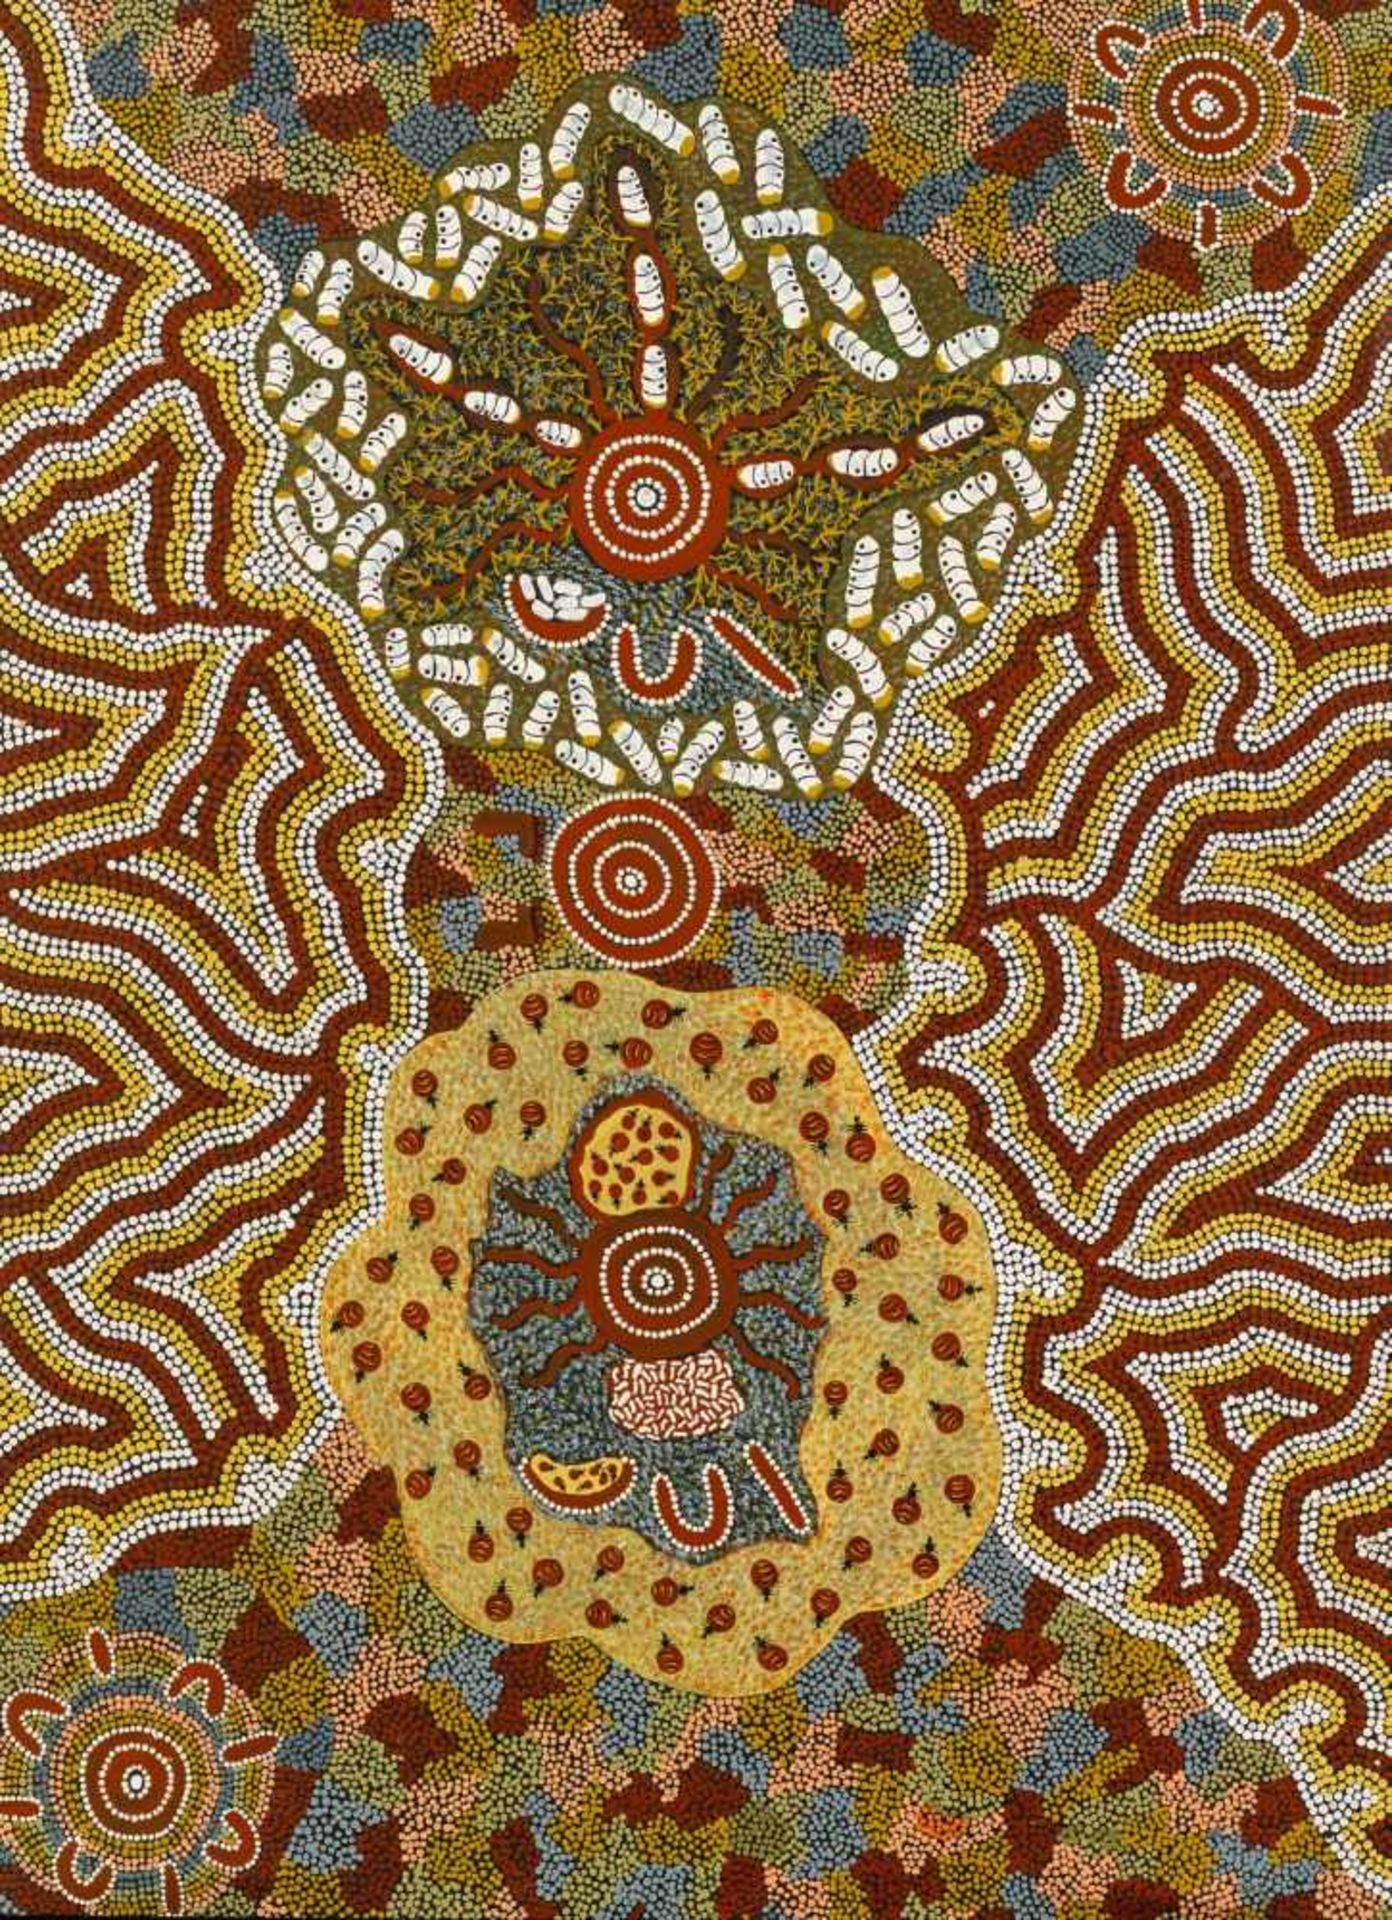 Aboriginal Art. Tjukurrpar. Acryl auf Leinwand. 121 x 85,5cm. Bezeichnet verso: CSCA 45, 50.